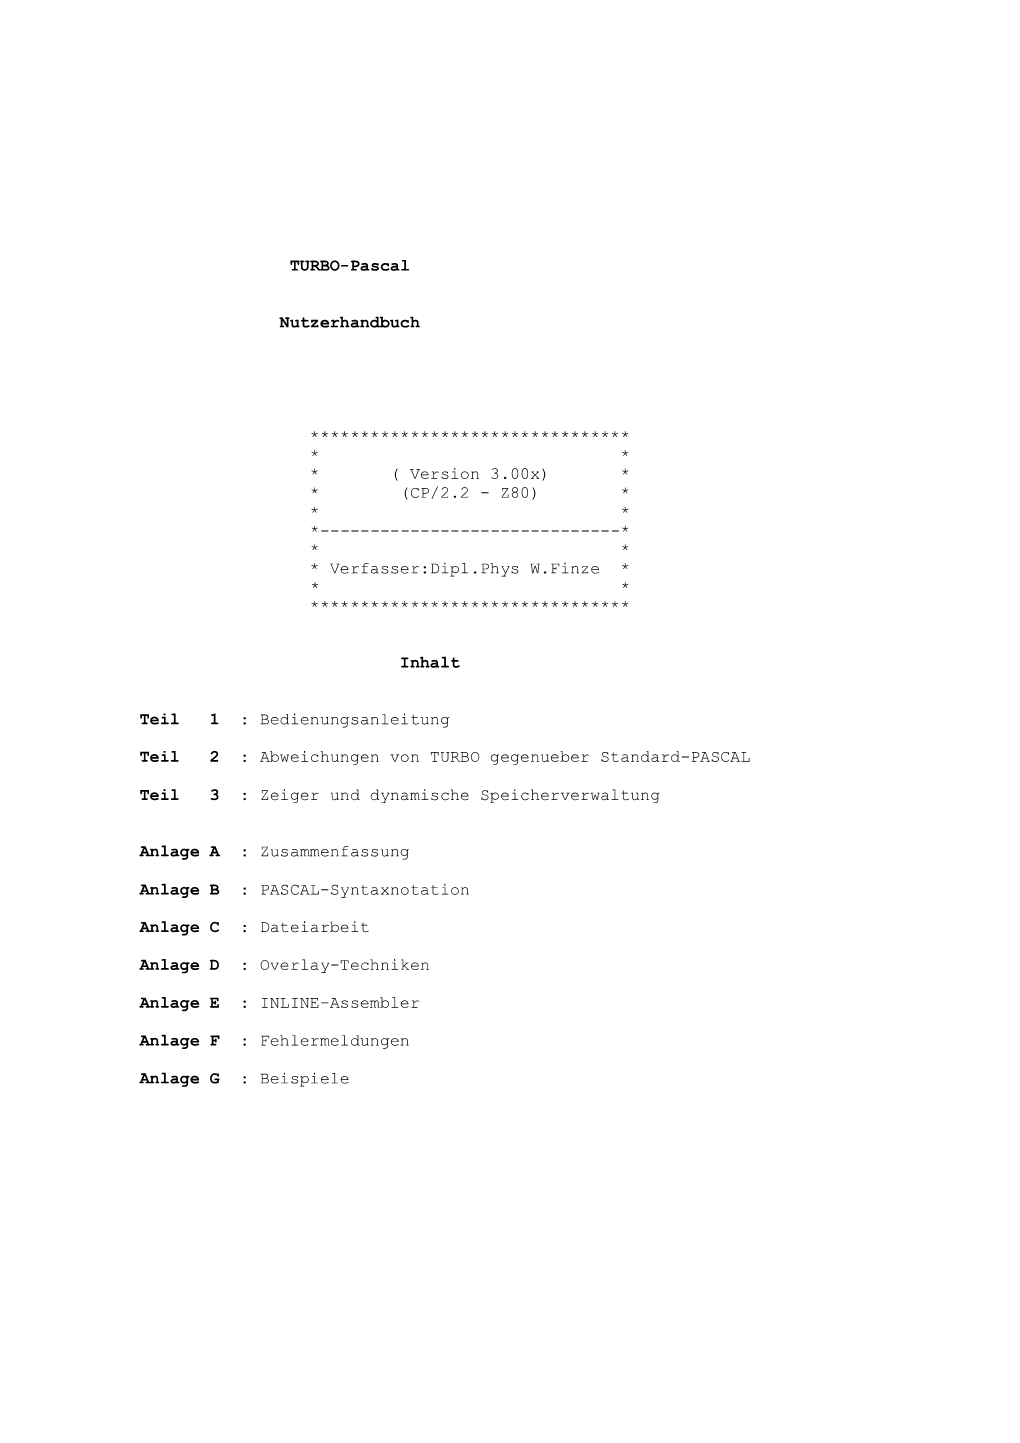 TURBO-Pascal Nutzerhandbuch